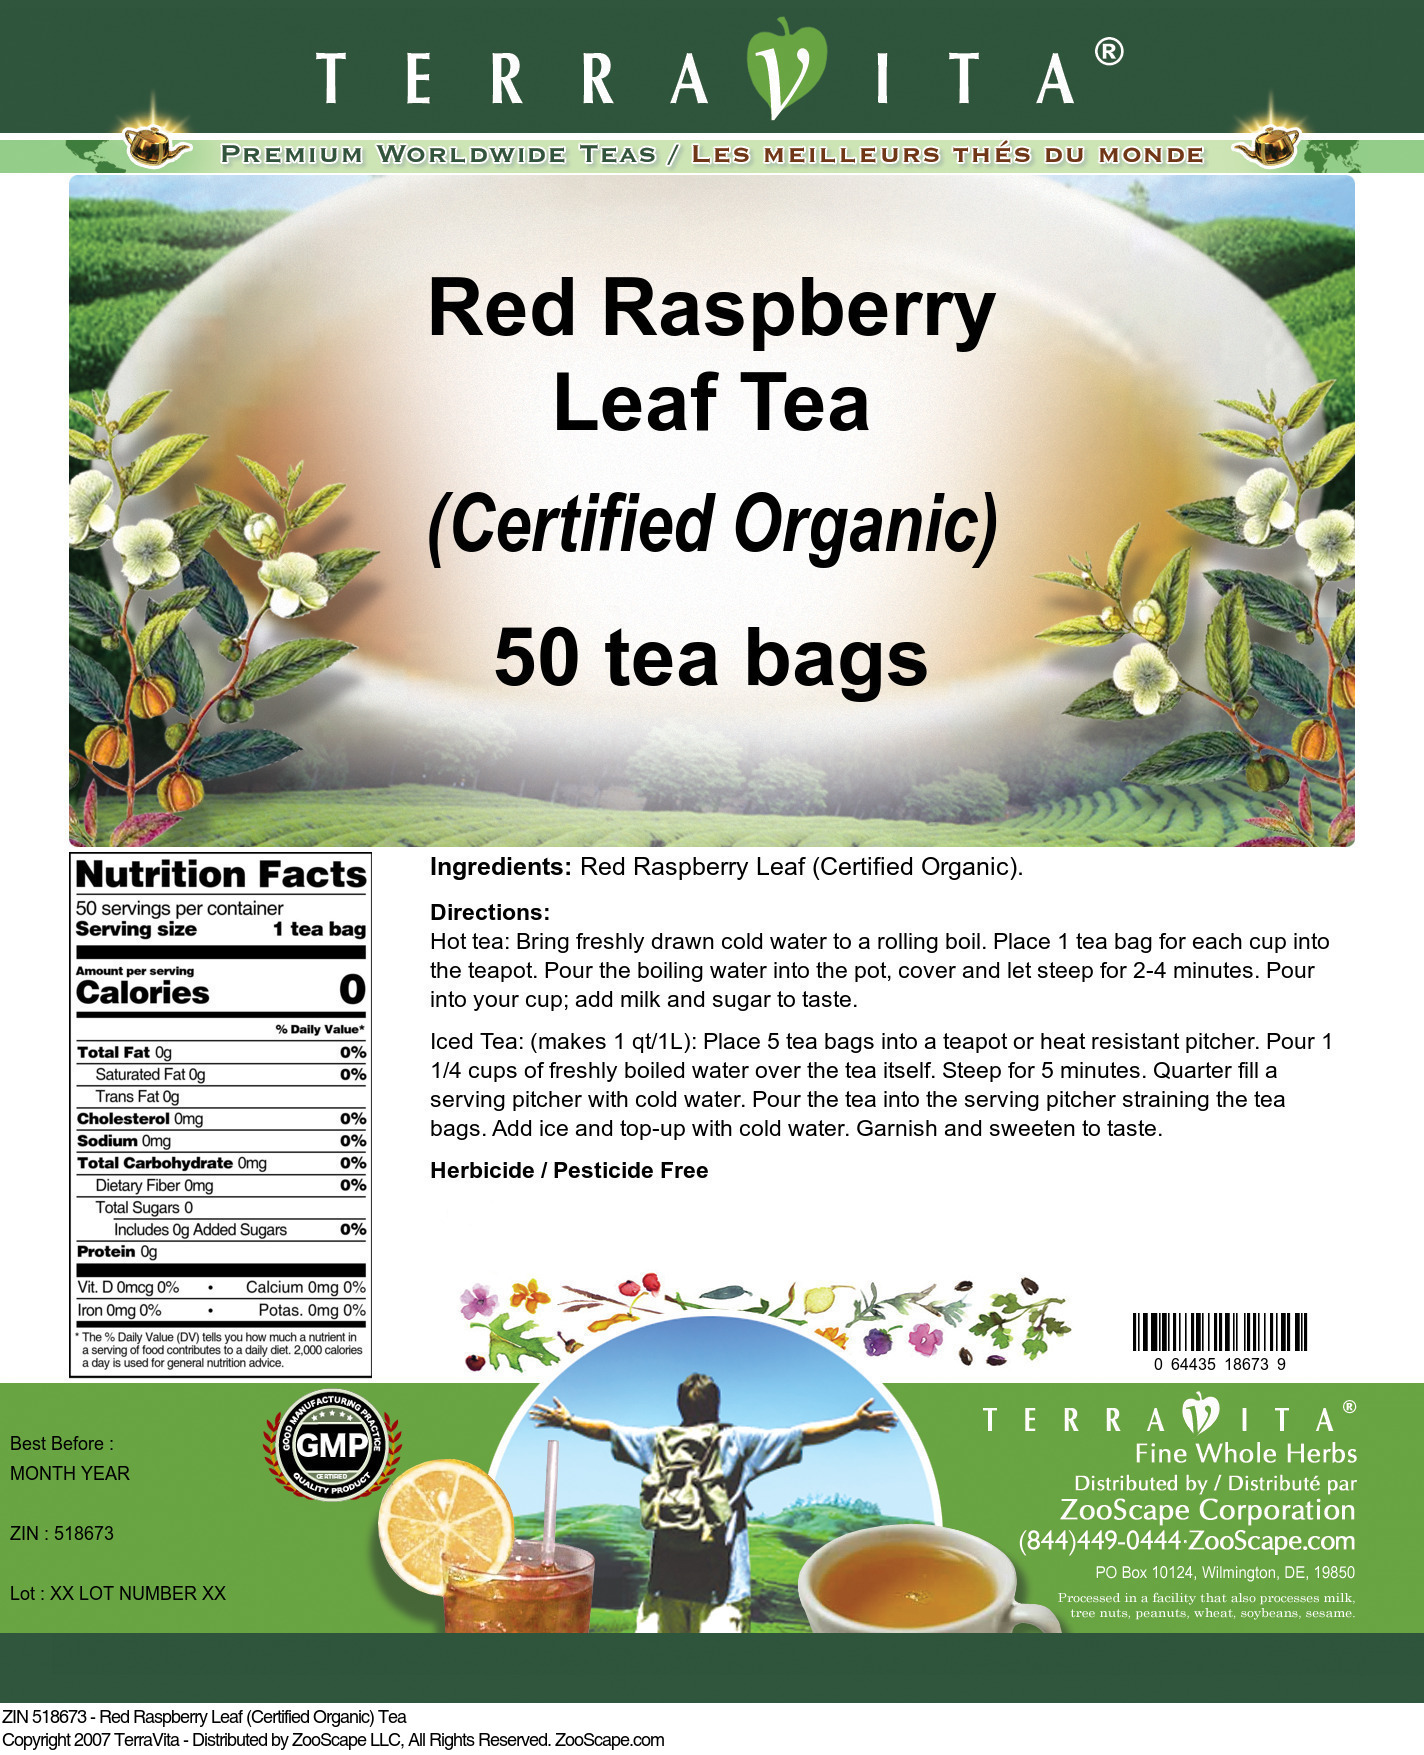 Red Raspberry Leaf (Certified Organic) Tea - Label